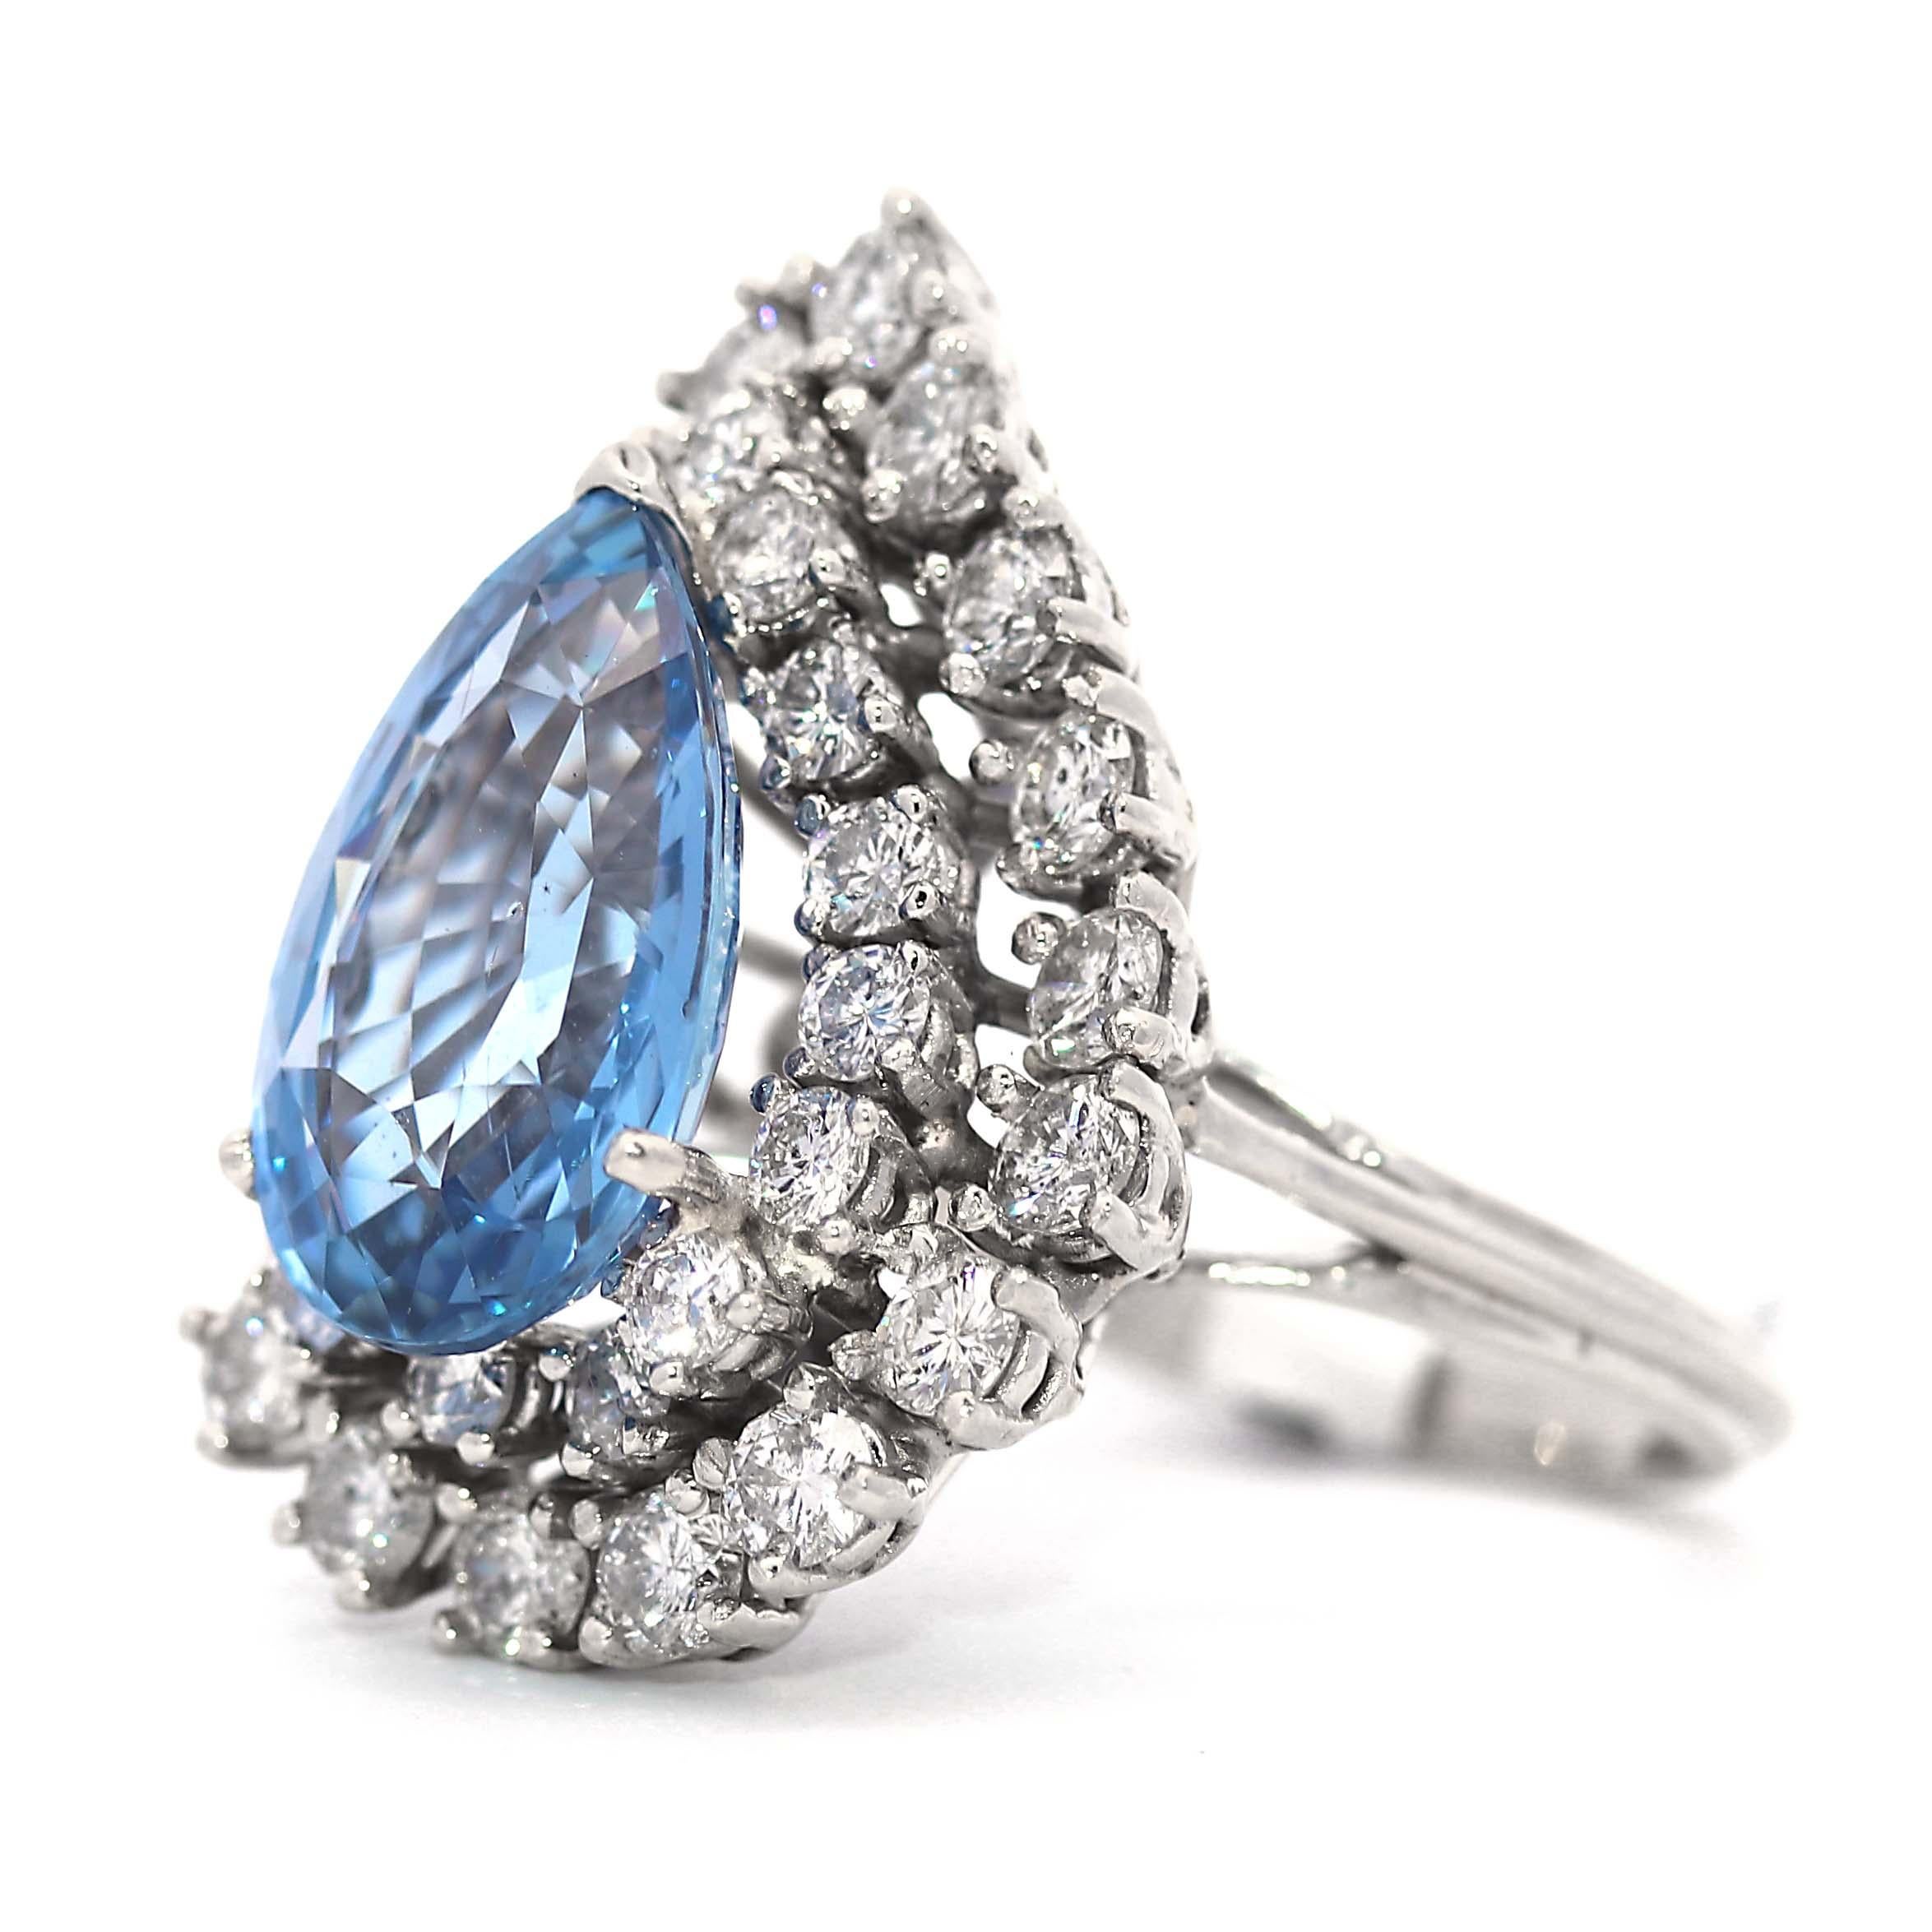 GIA certified No Heat Sri Lanka/ Ceylon Sapphire weighing 8.38 carats pear-shaped diamond ring.  The center pear-cut Ceylon Sapphire radiates with a brilliant, bright blue hue. This captivating centerpiece, boasting the prestigious GIA